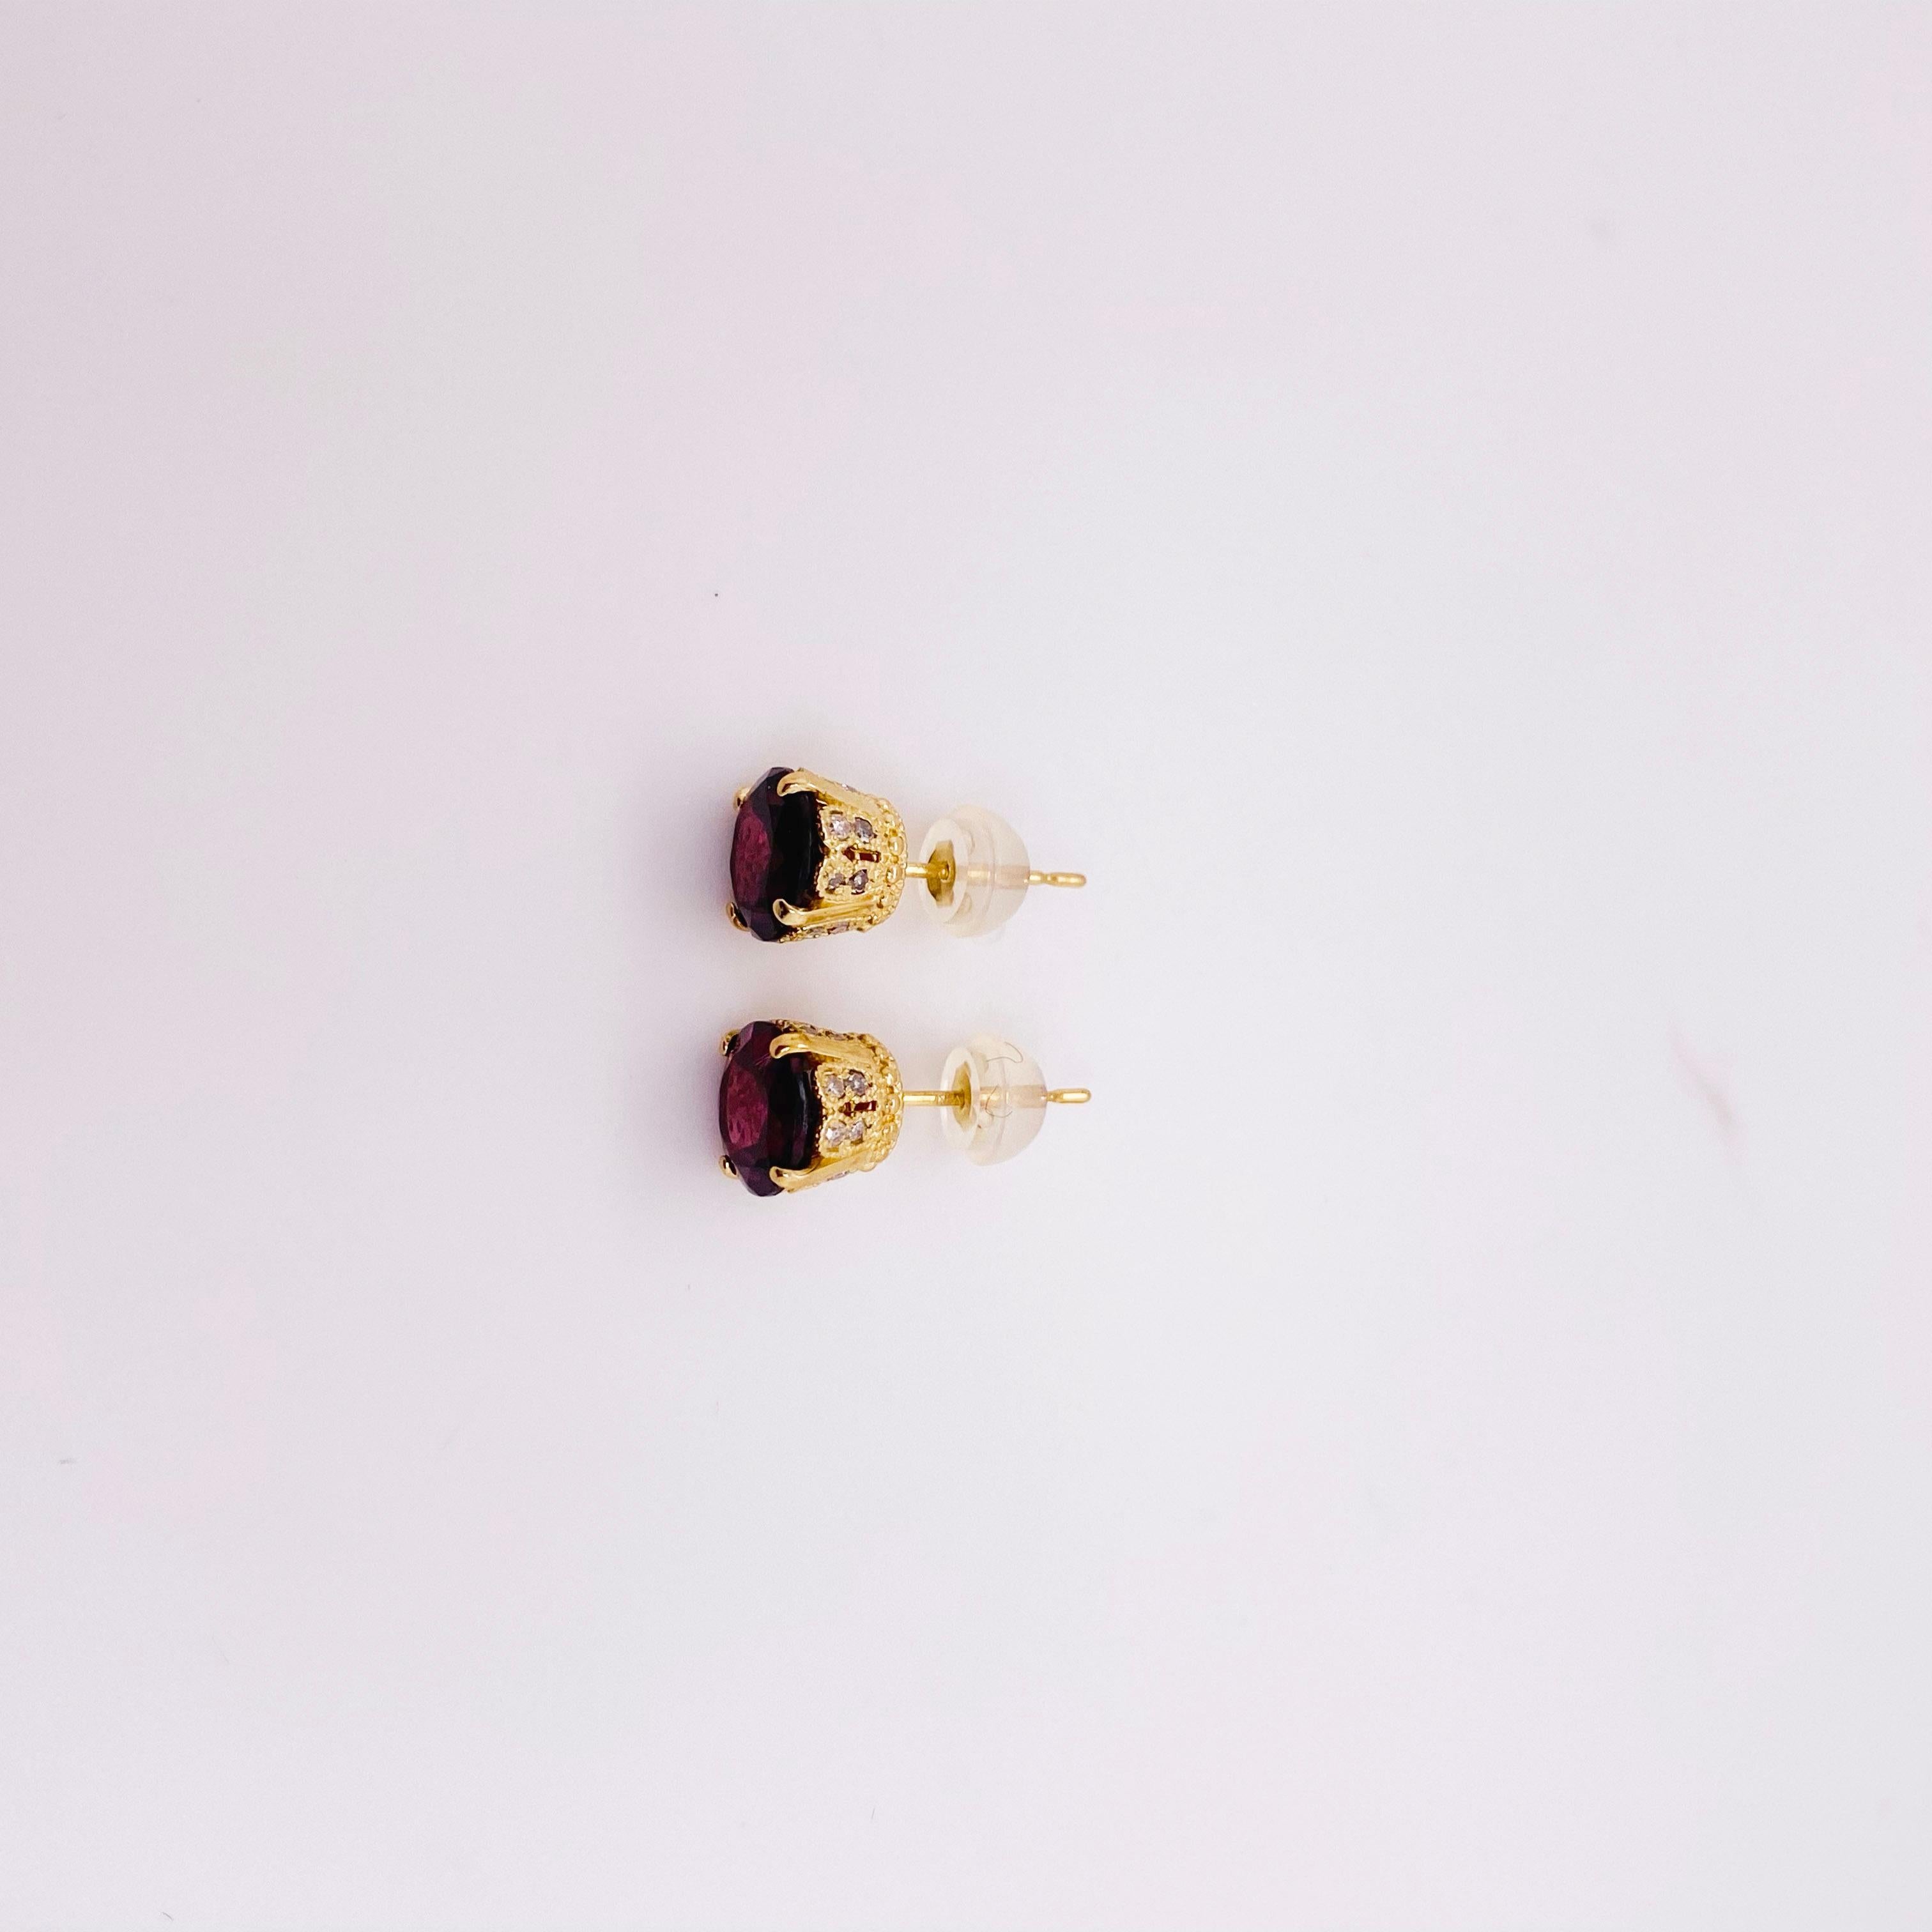 Contemporary Garnet Stud Earrings Yellow Gold Posts, Four Prong Rhodalite Garnet Earrings